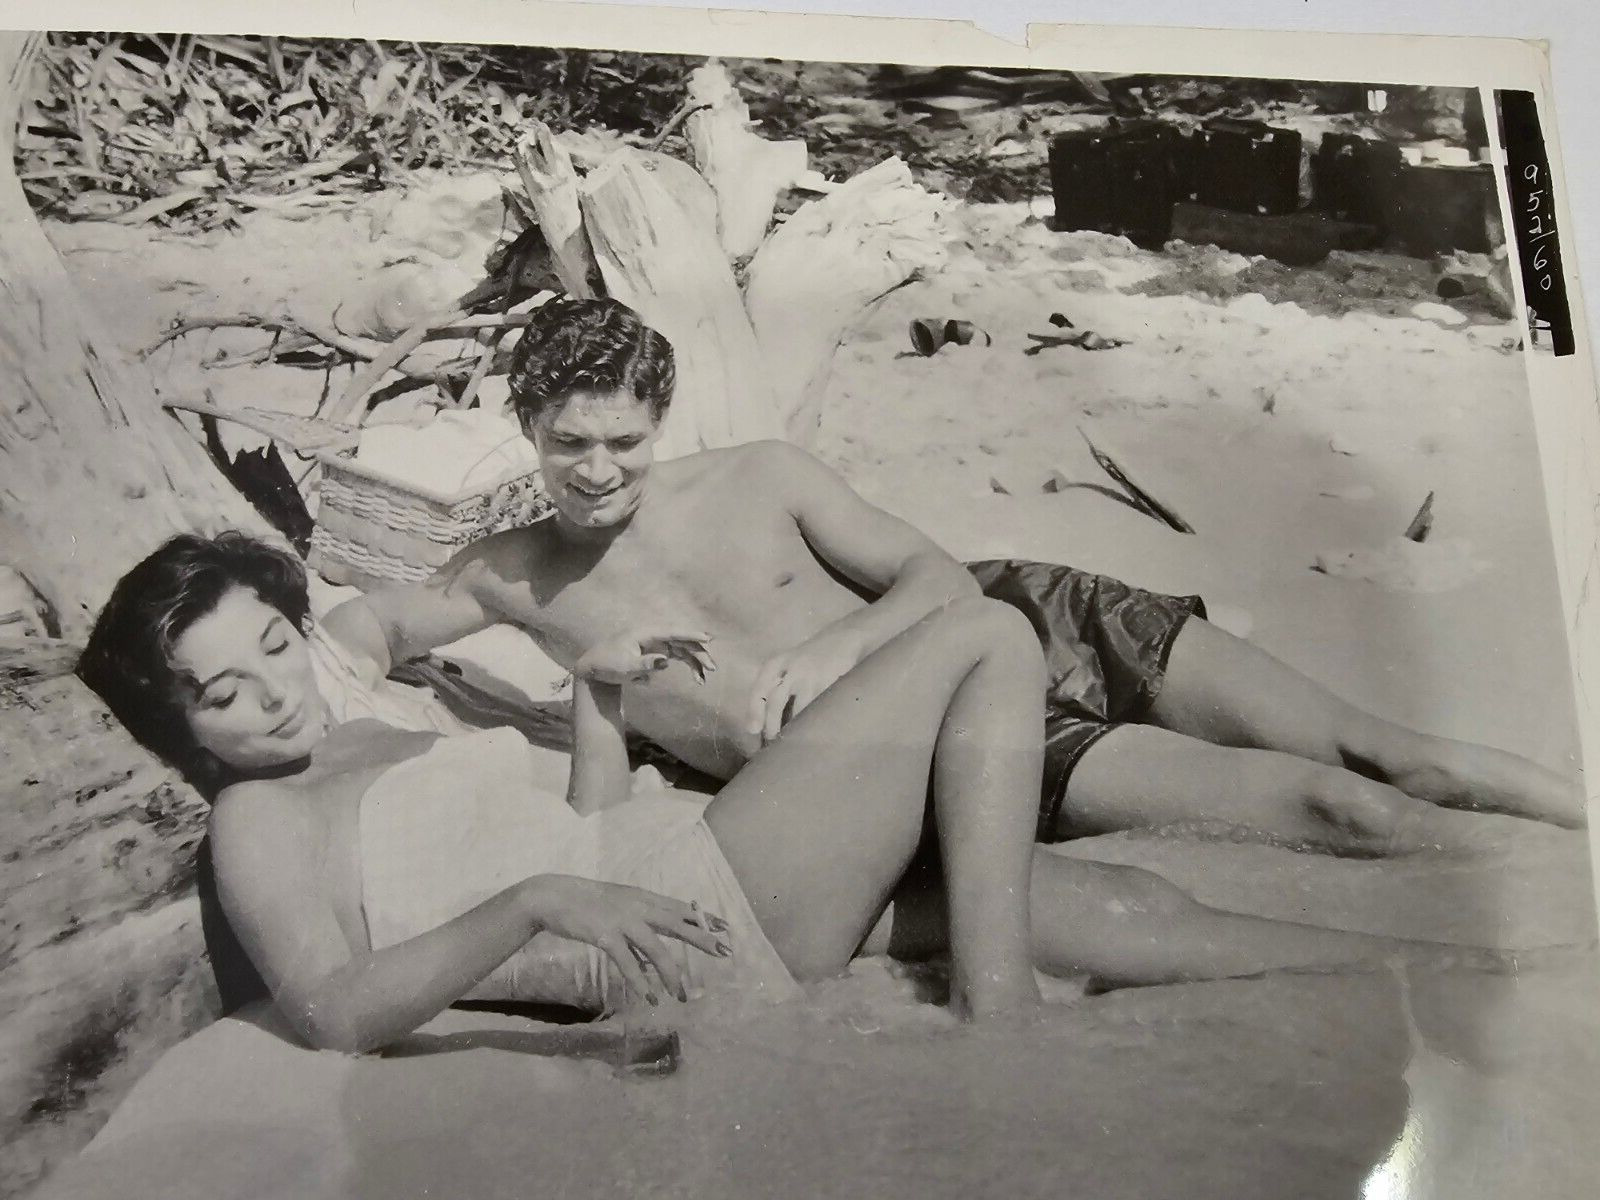 Island In The Sun-Joan Collins-Stephen Boyd-1957 Movie Photo 8x10